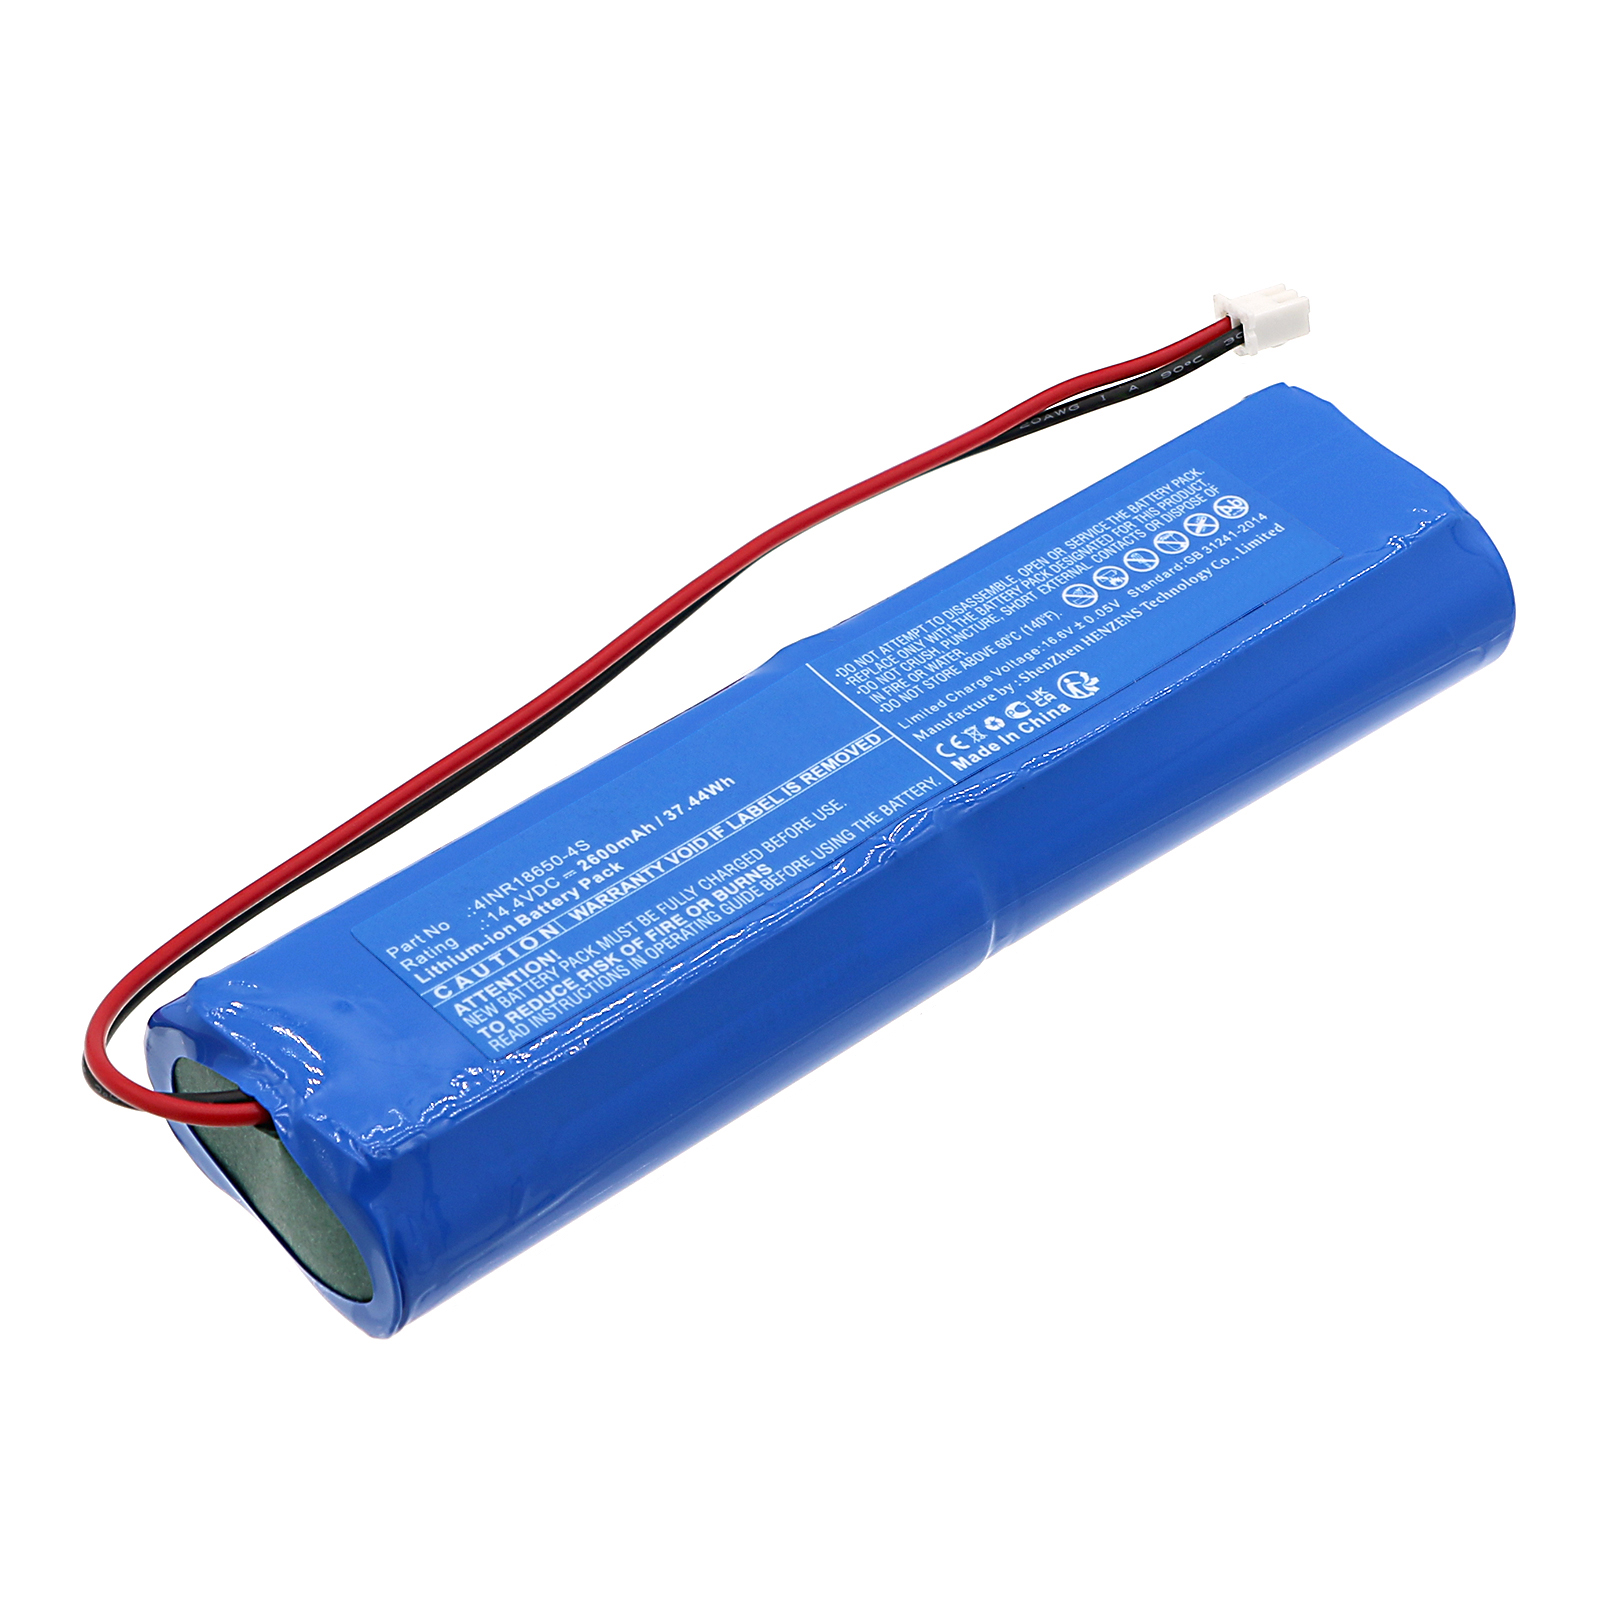 Synergy Digital Vacuum Cleaner Battery, Compatible with Villalin 4INR18650-4S Vacuum Cleaner Battery (Li-ion, 14.4V, 2600mAh)